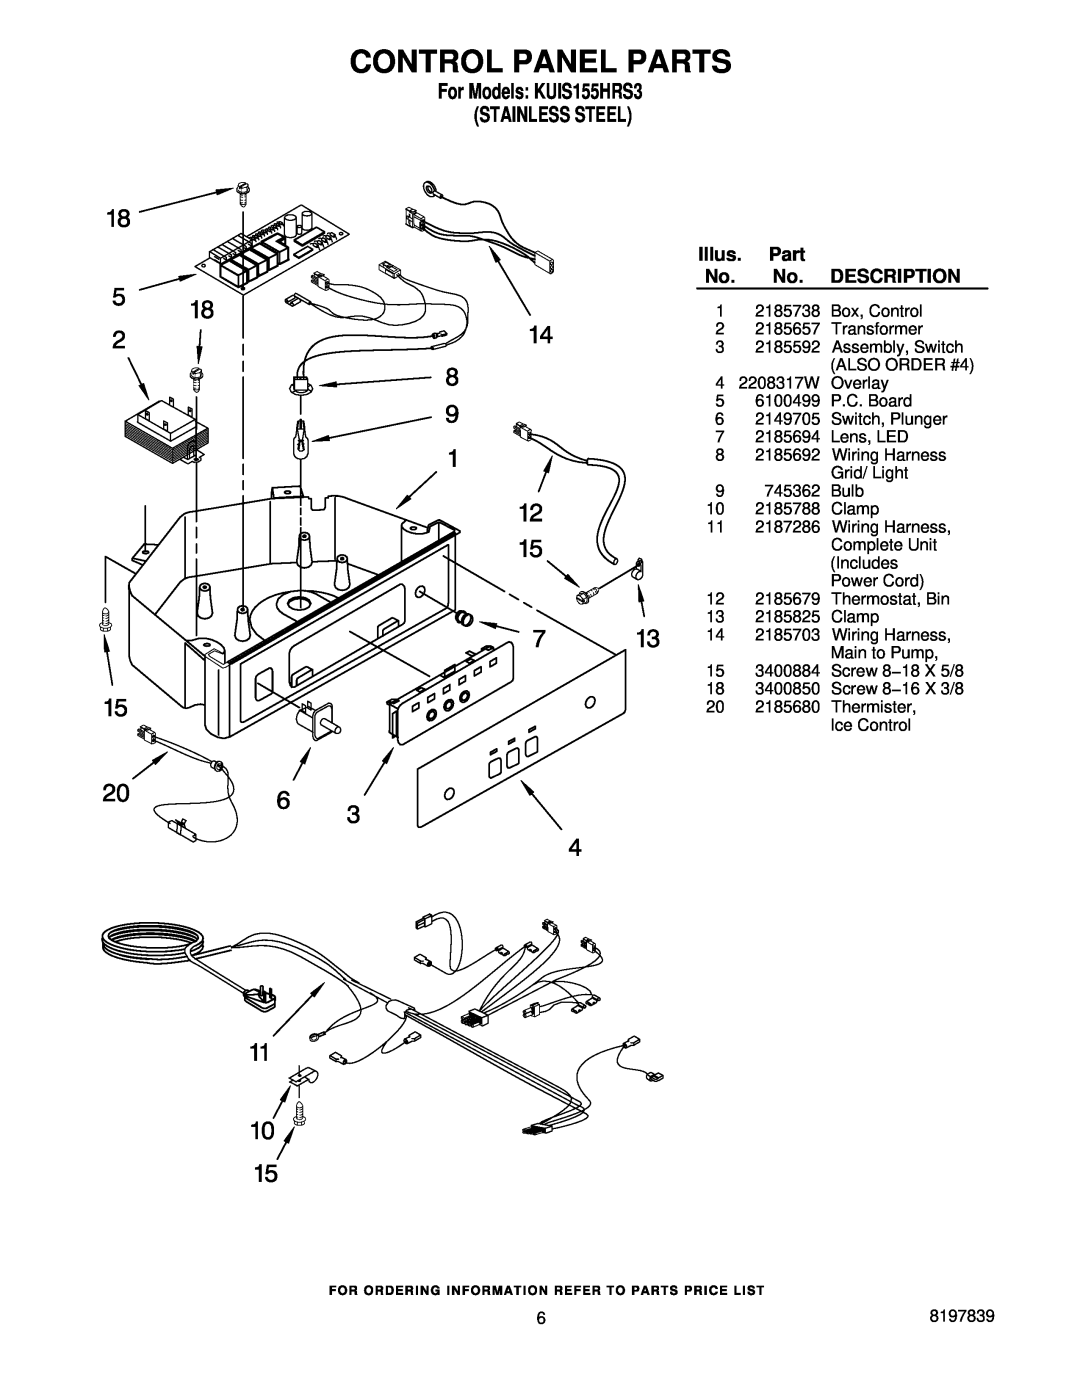 KitchenAid manual Control Panel Parts, Illus, Description, For Models KUIS155HRS3 STAINLESS STEEL 